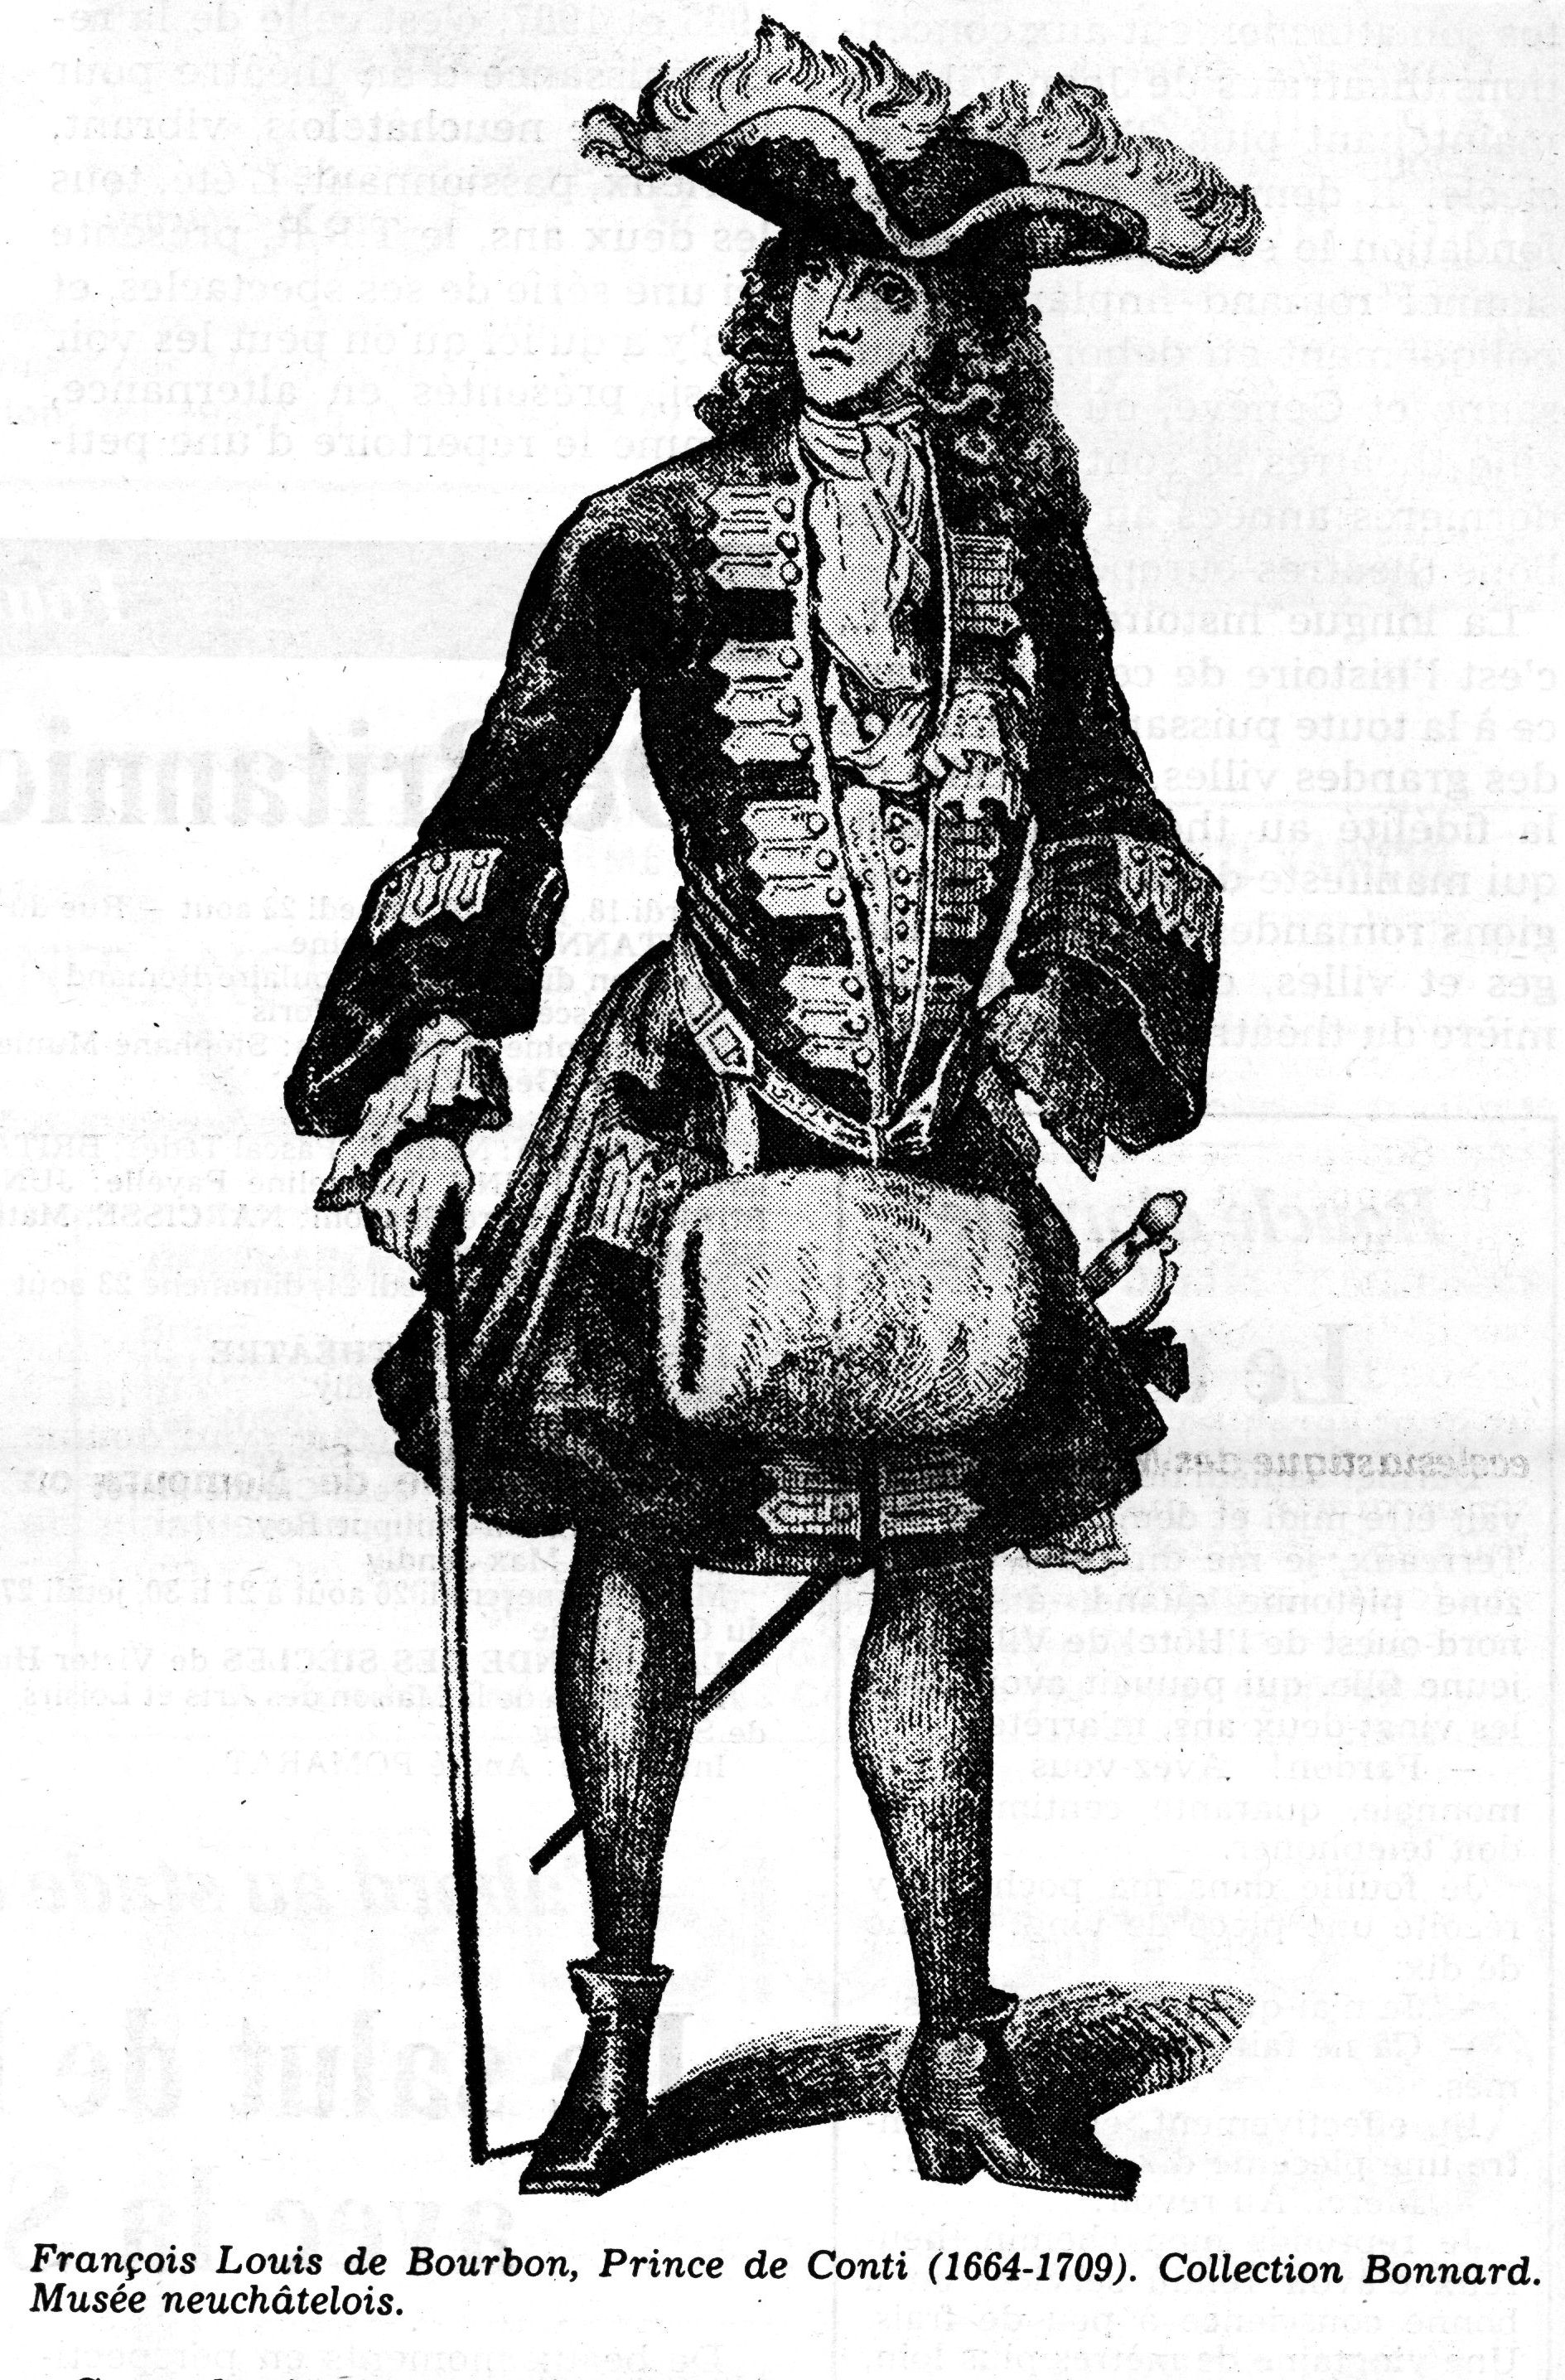 Prince de Conti, 1664-1709